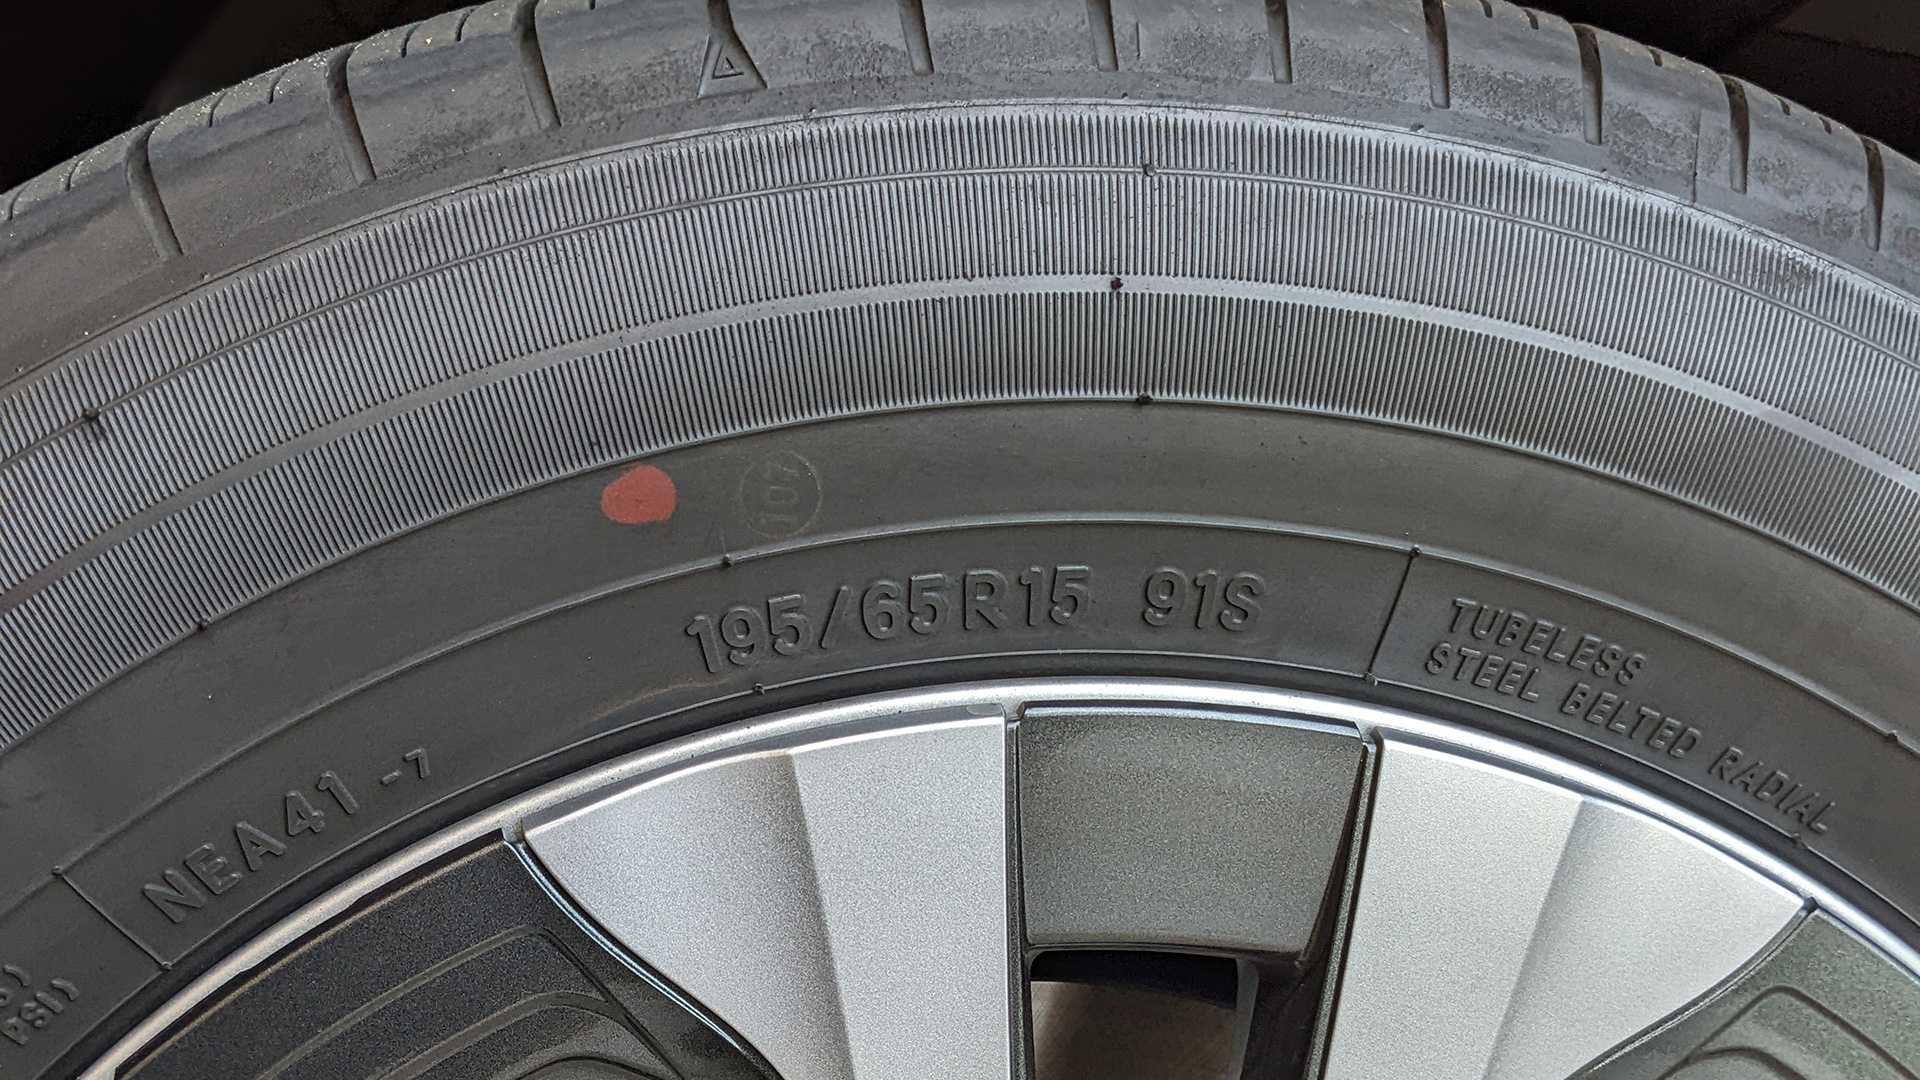 making sense of tire sizes